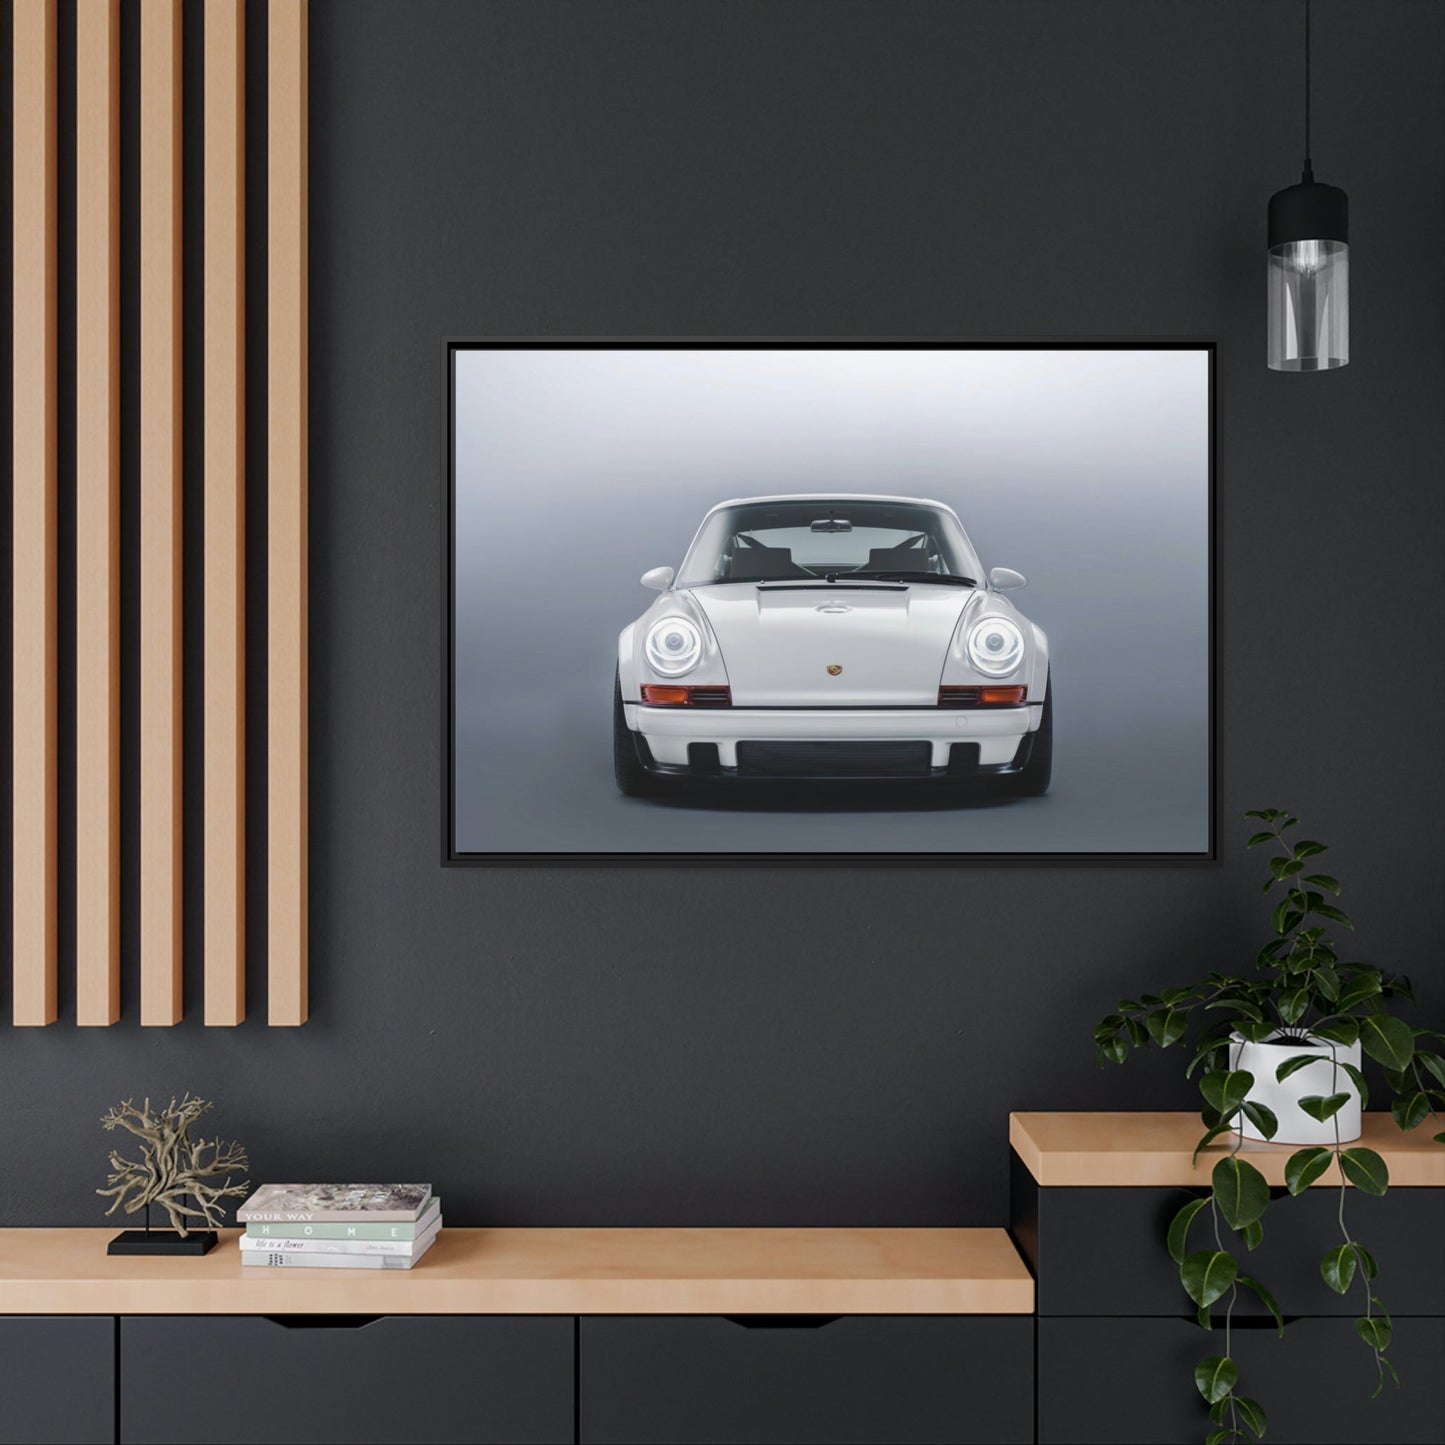 Sleek Sophistication: Canvas Wall Art Print of the Porsche Aesthetic